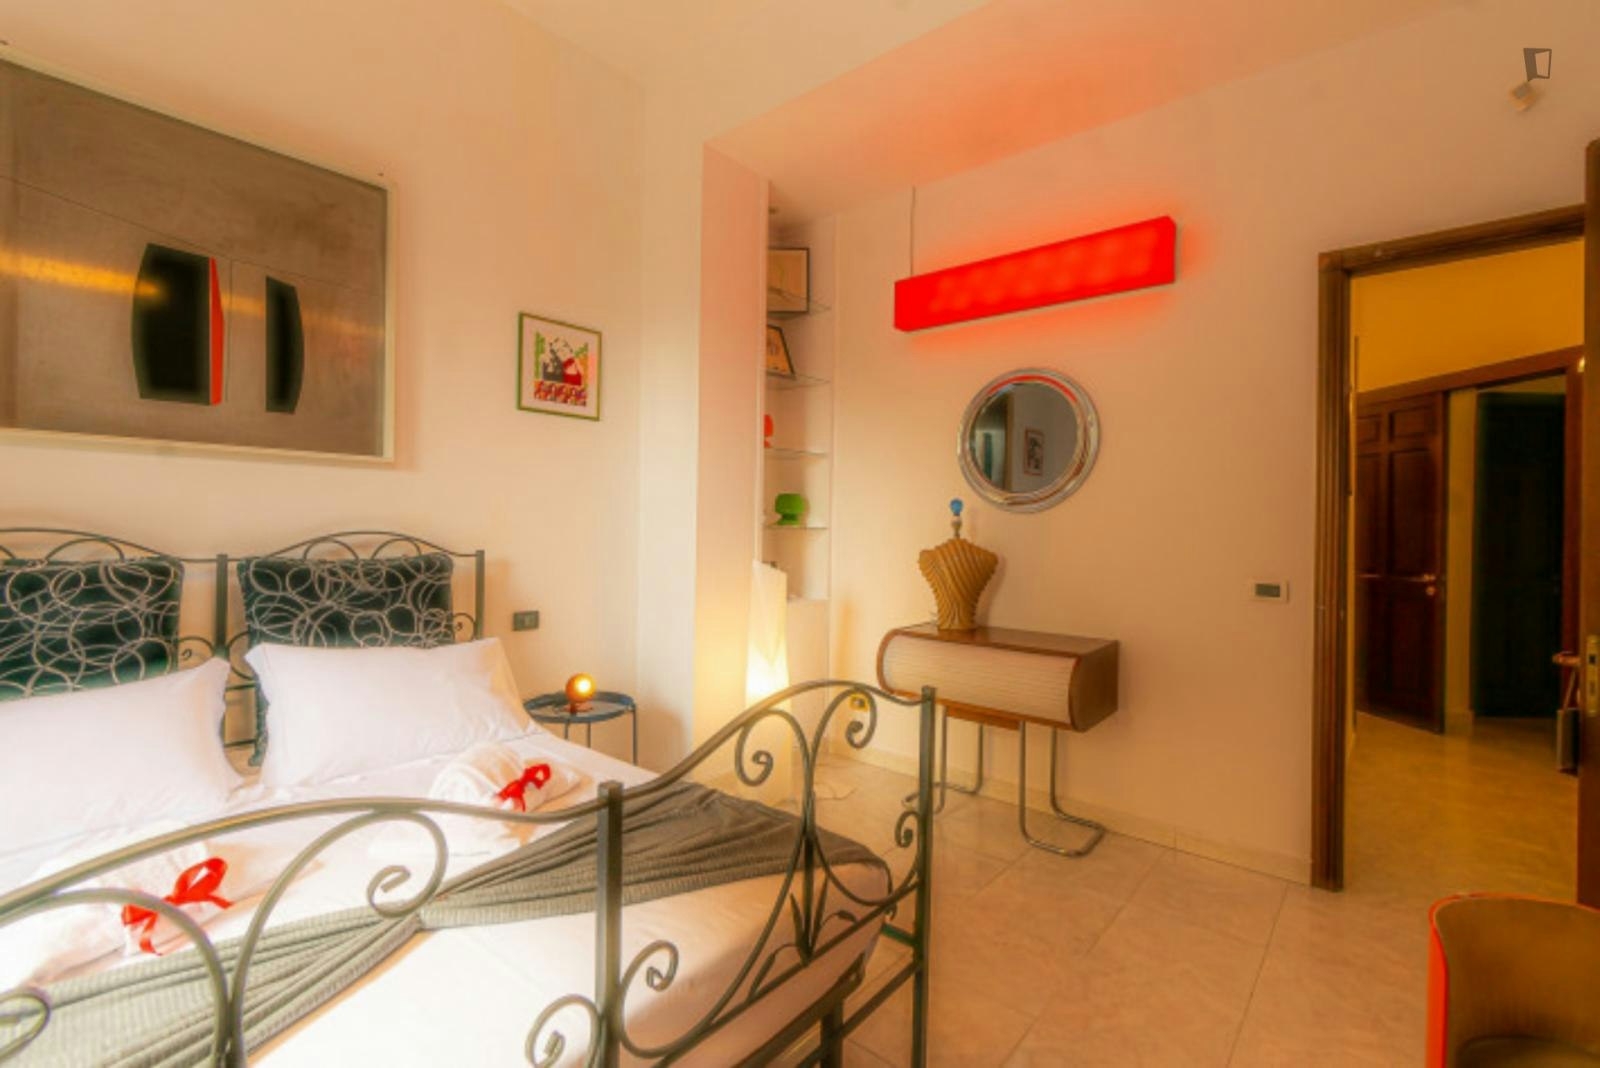 Appealing 2-bedroom flat in Arenella